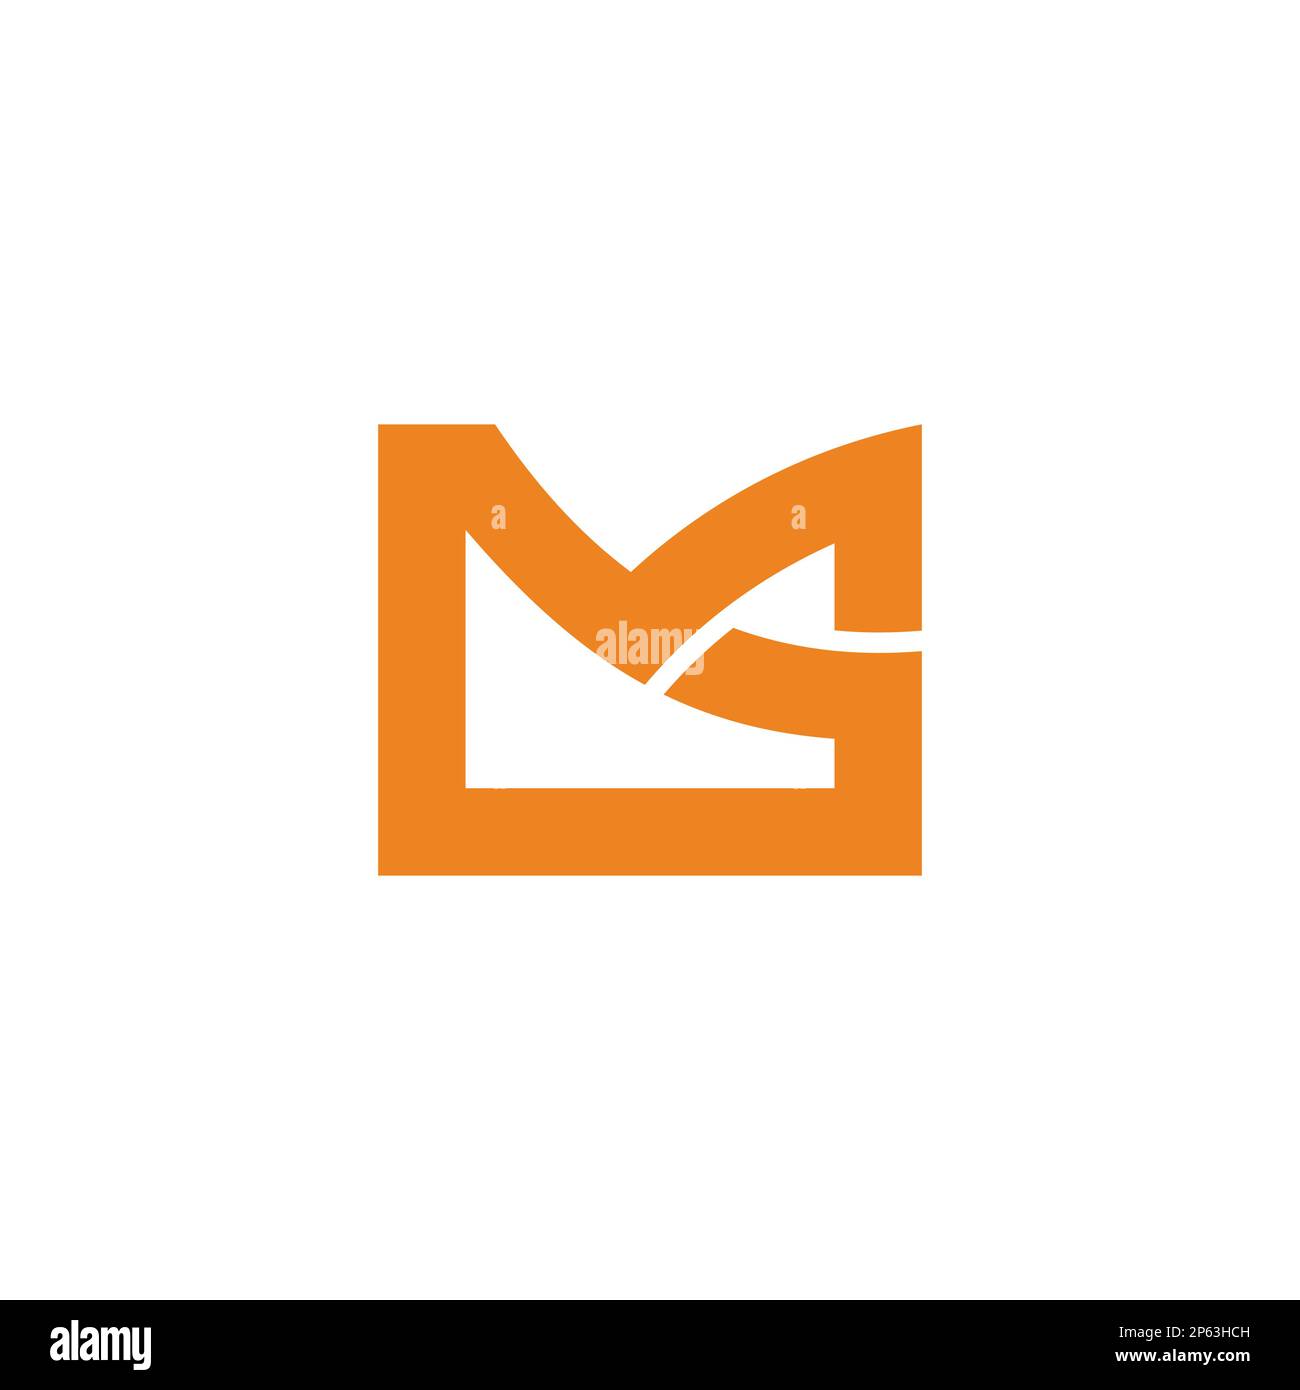 MG Monogram Logo Letter Geometric Polygonal Lens Rainbow Circle Shape Style  Royalty Free SVG, Cliparts, Vectors, and Stock Illustration. Image  175774022.